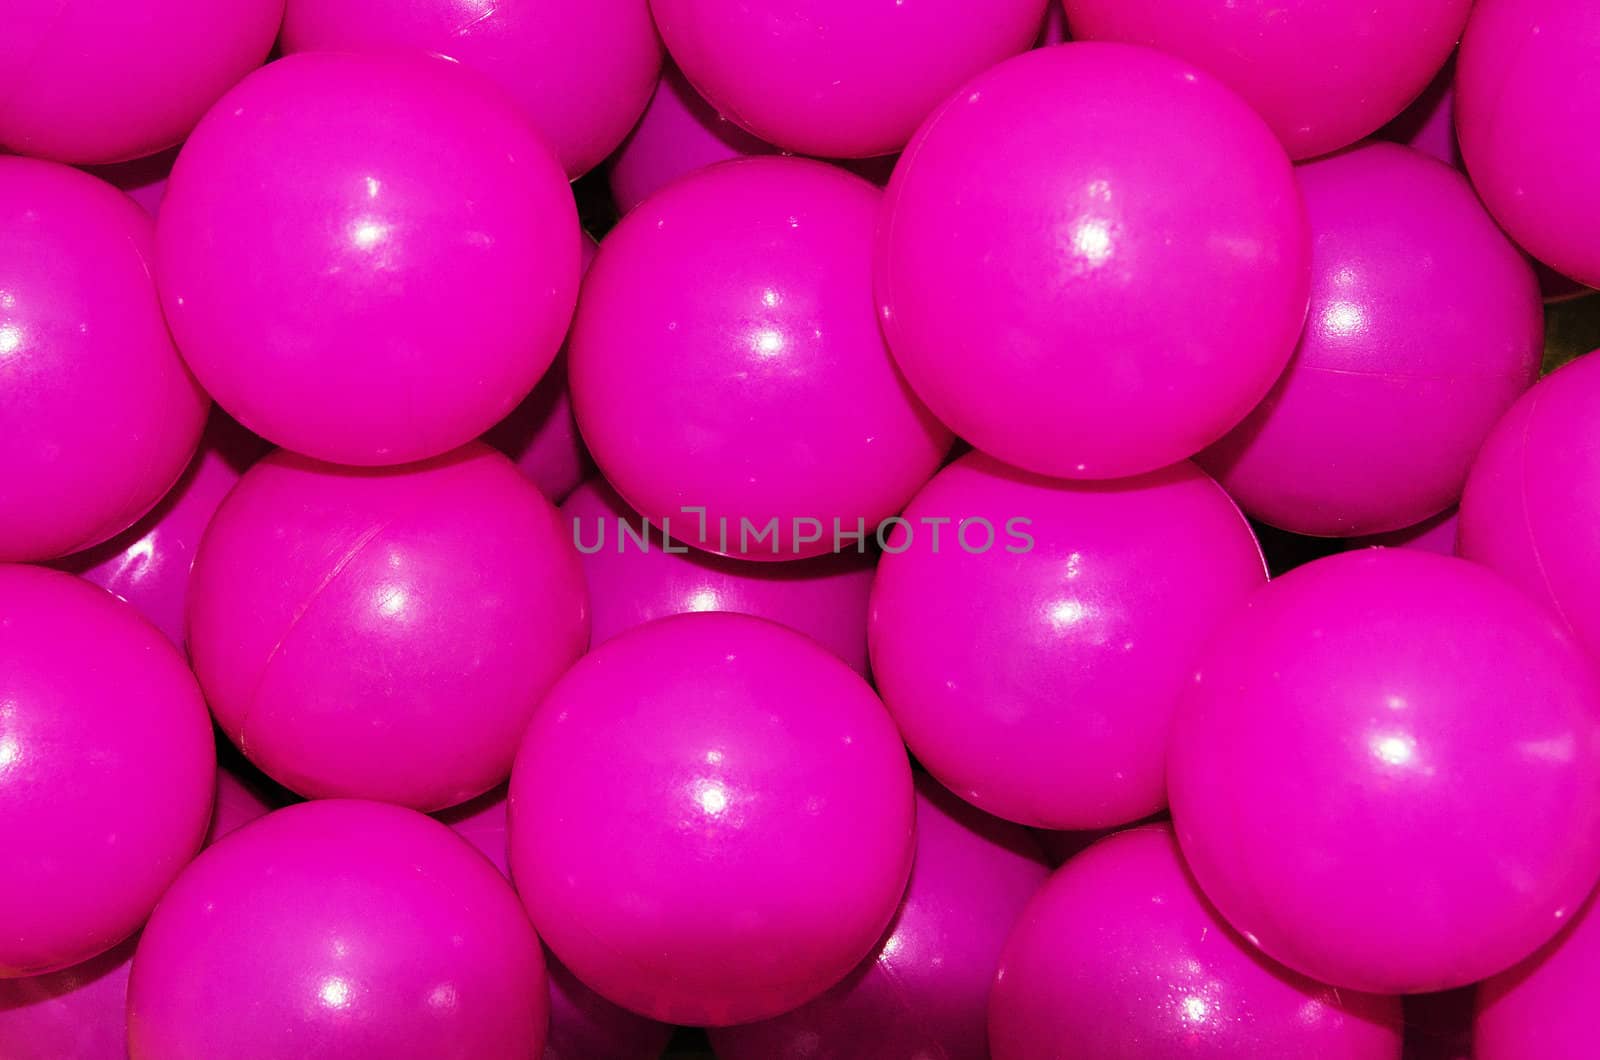 Amount of pink plastic play balls